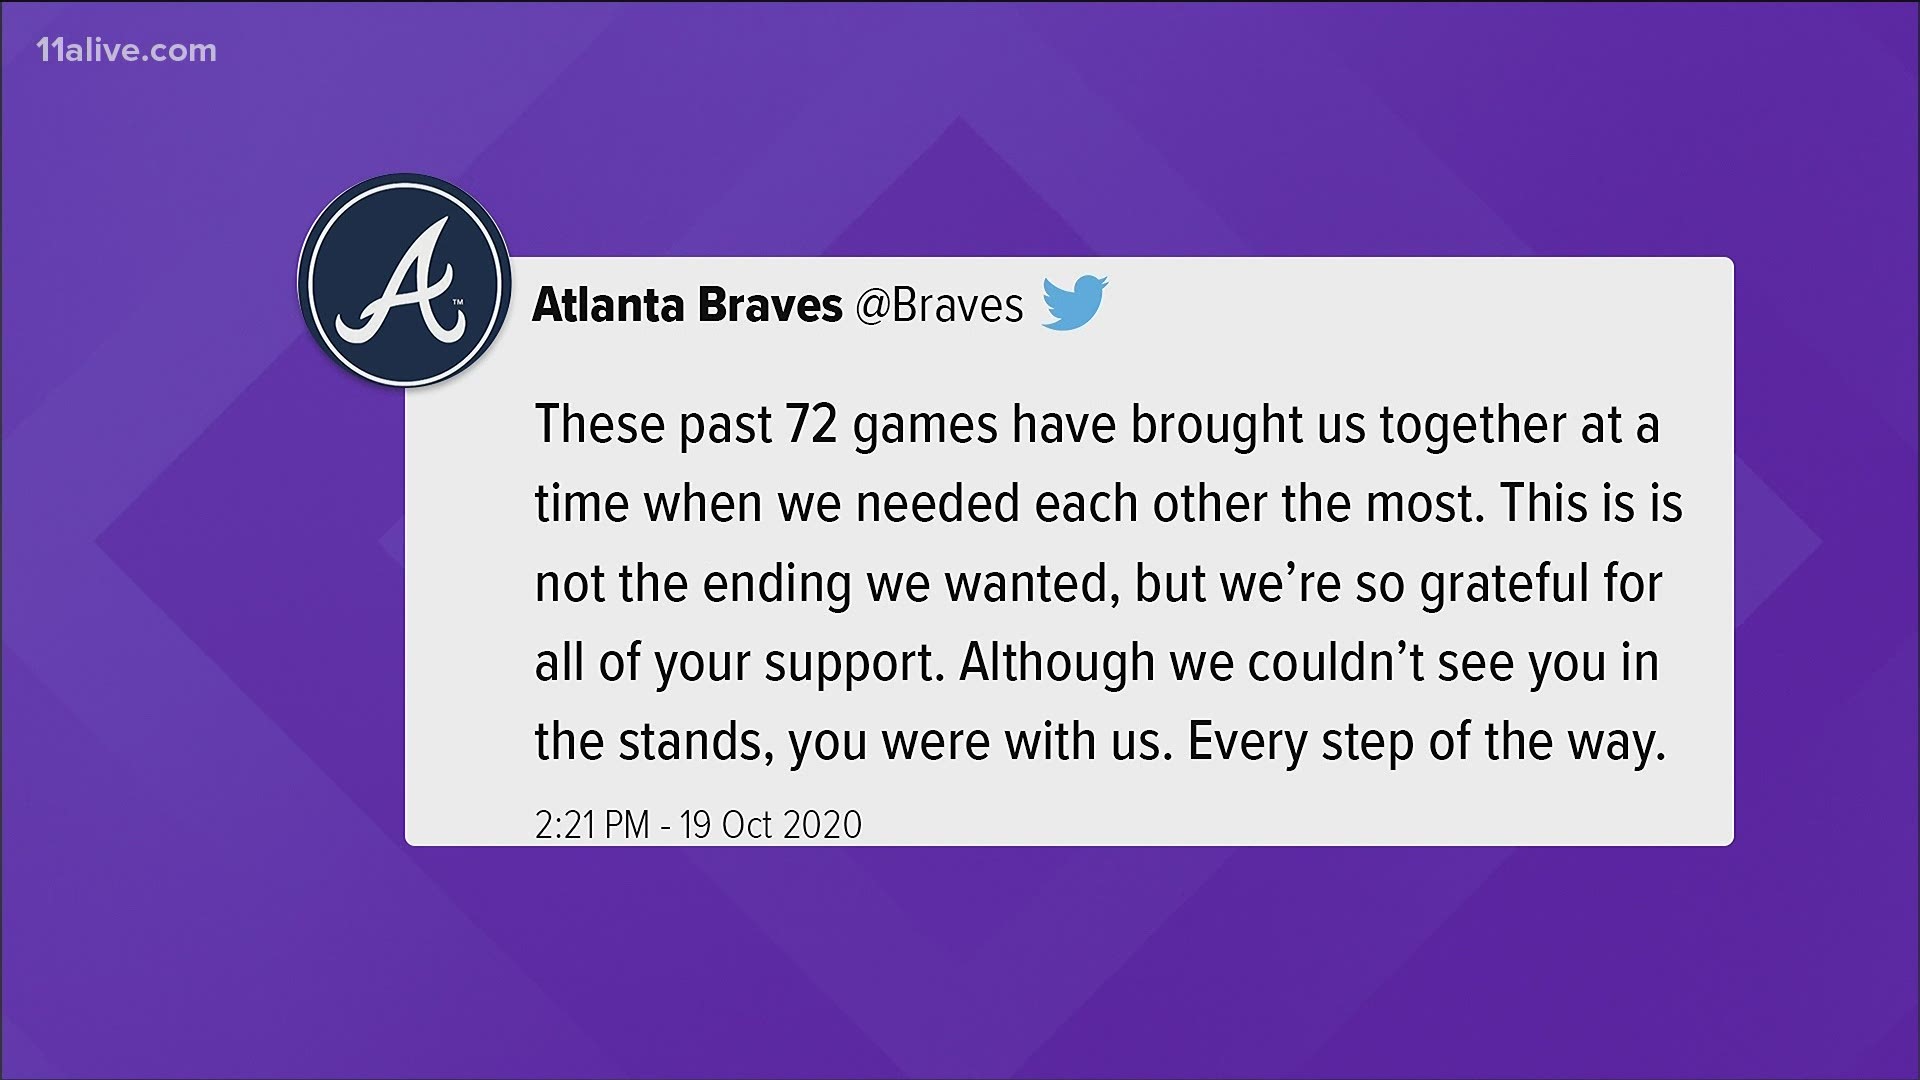 Braves Hawks Atlanta United games will no longer be on Hulu TV 11alive